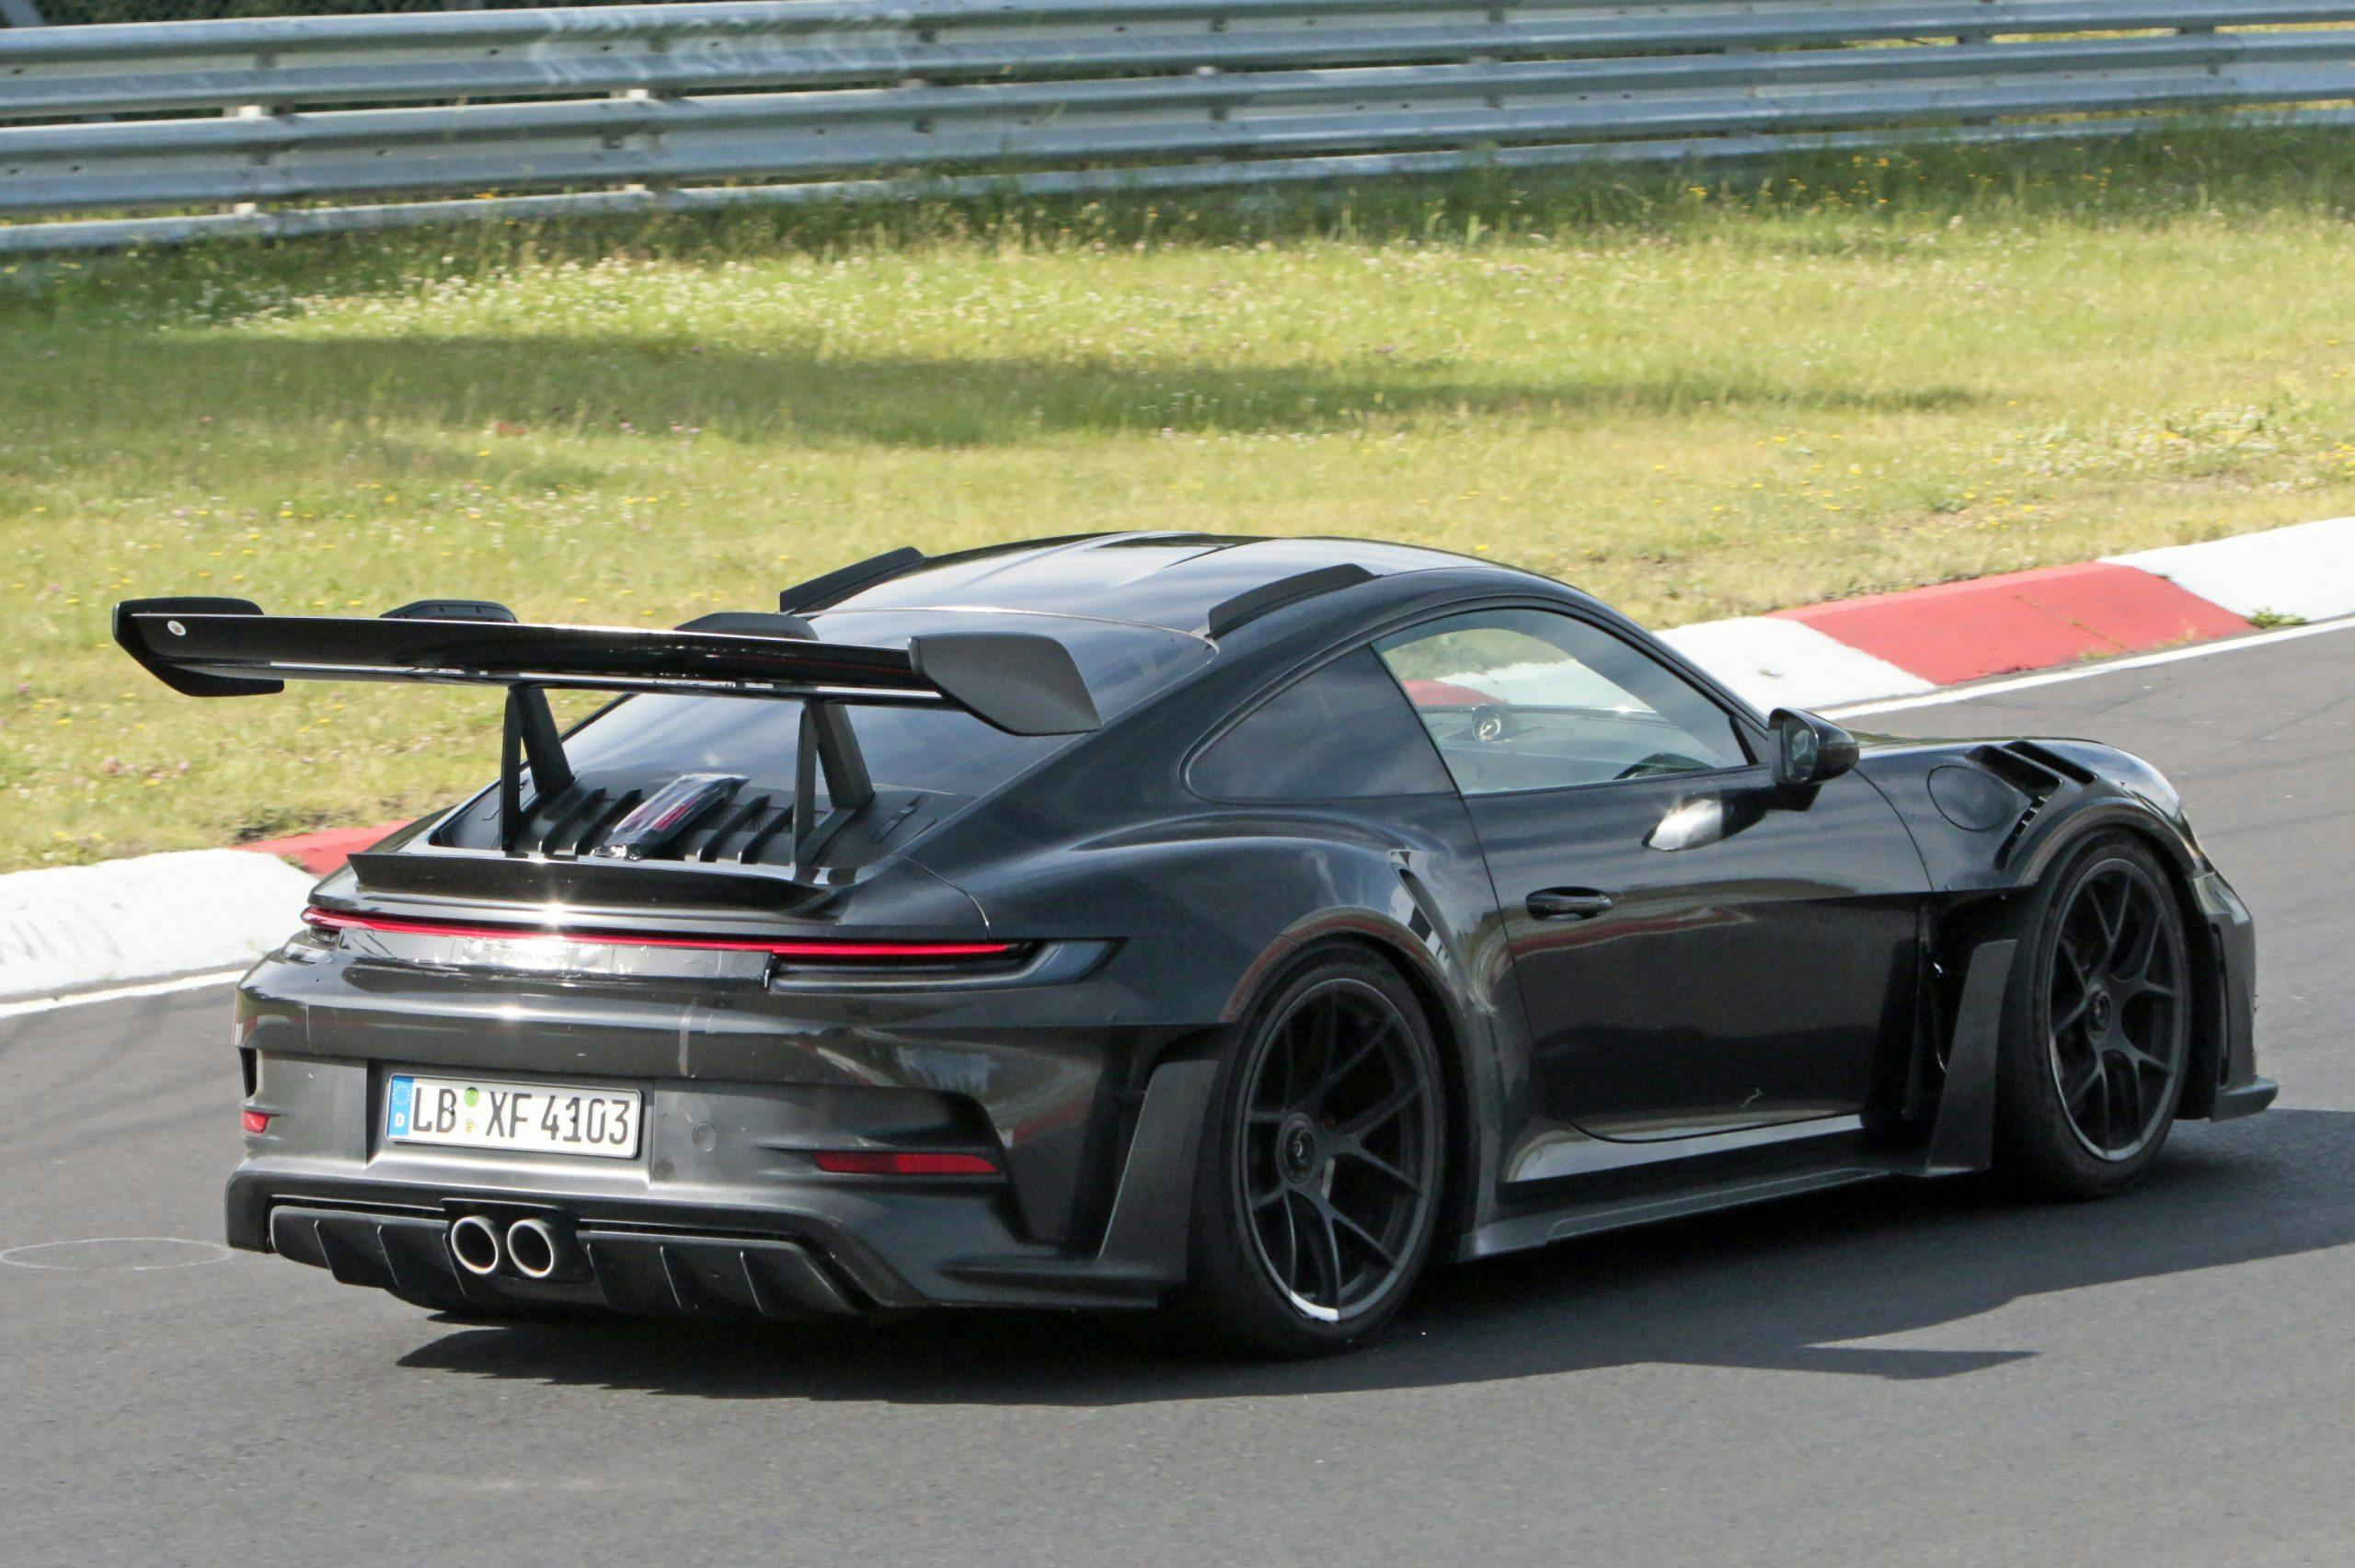 Porsche 911 GT3 RS Spy Shots exterior close up rear three quarter